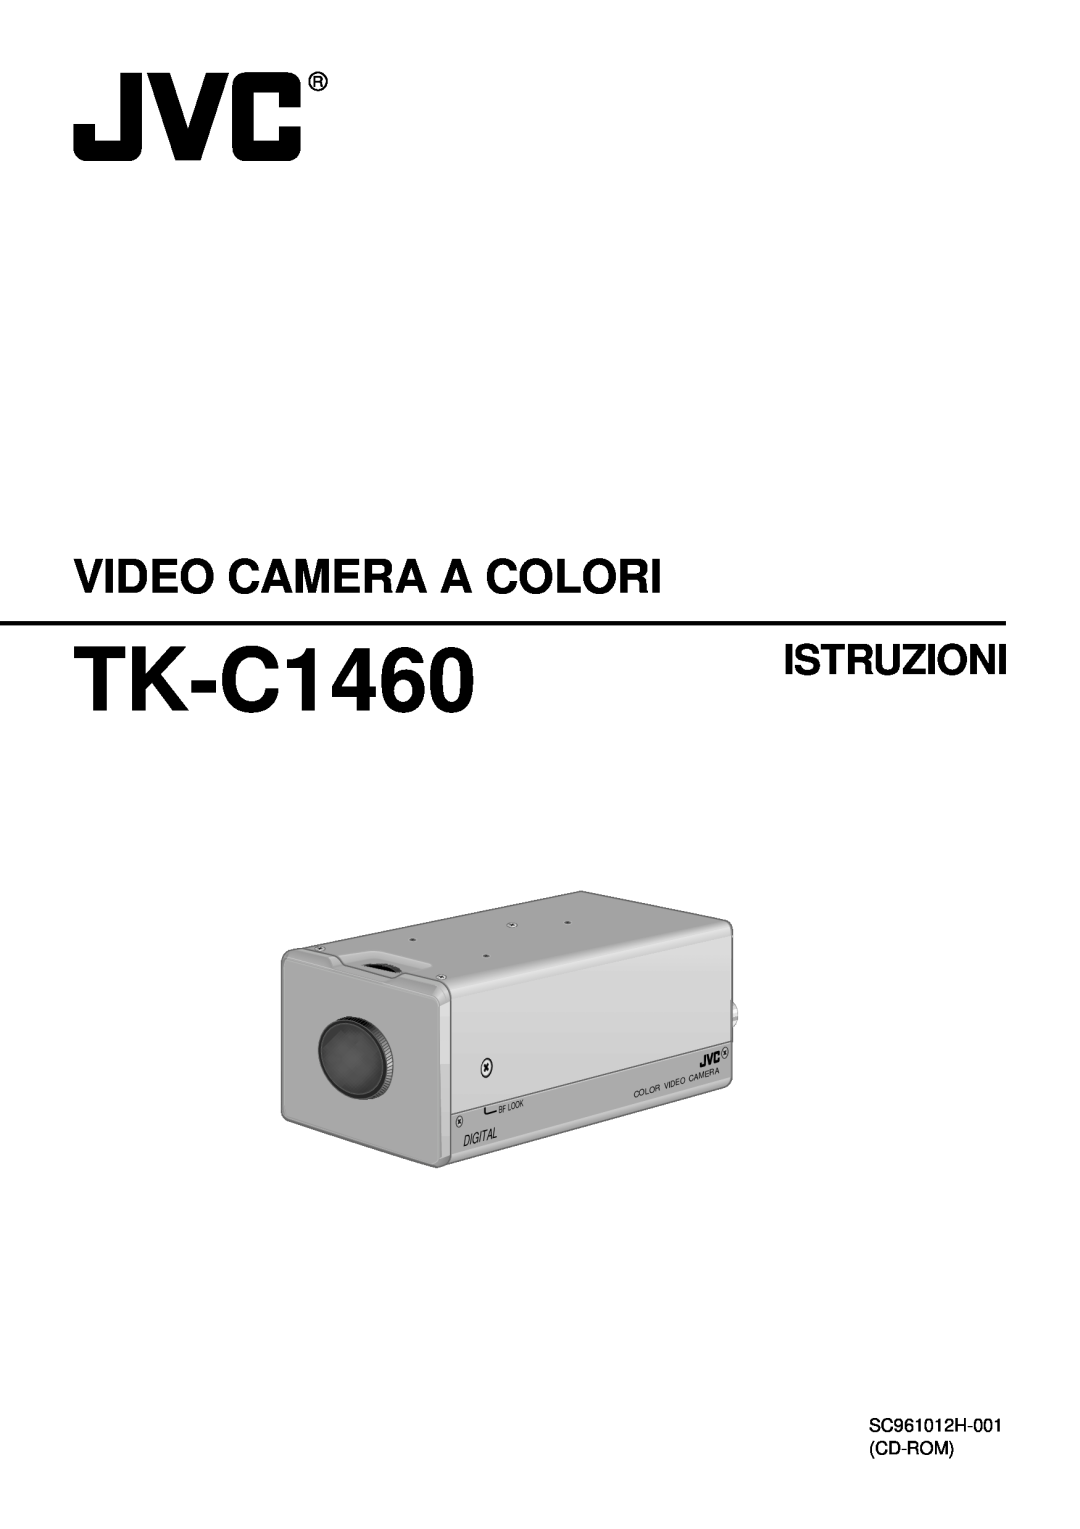 JVC manual Video Camera A Colori, TK-C1460 ISTRUZIONI, Digital, Look 